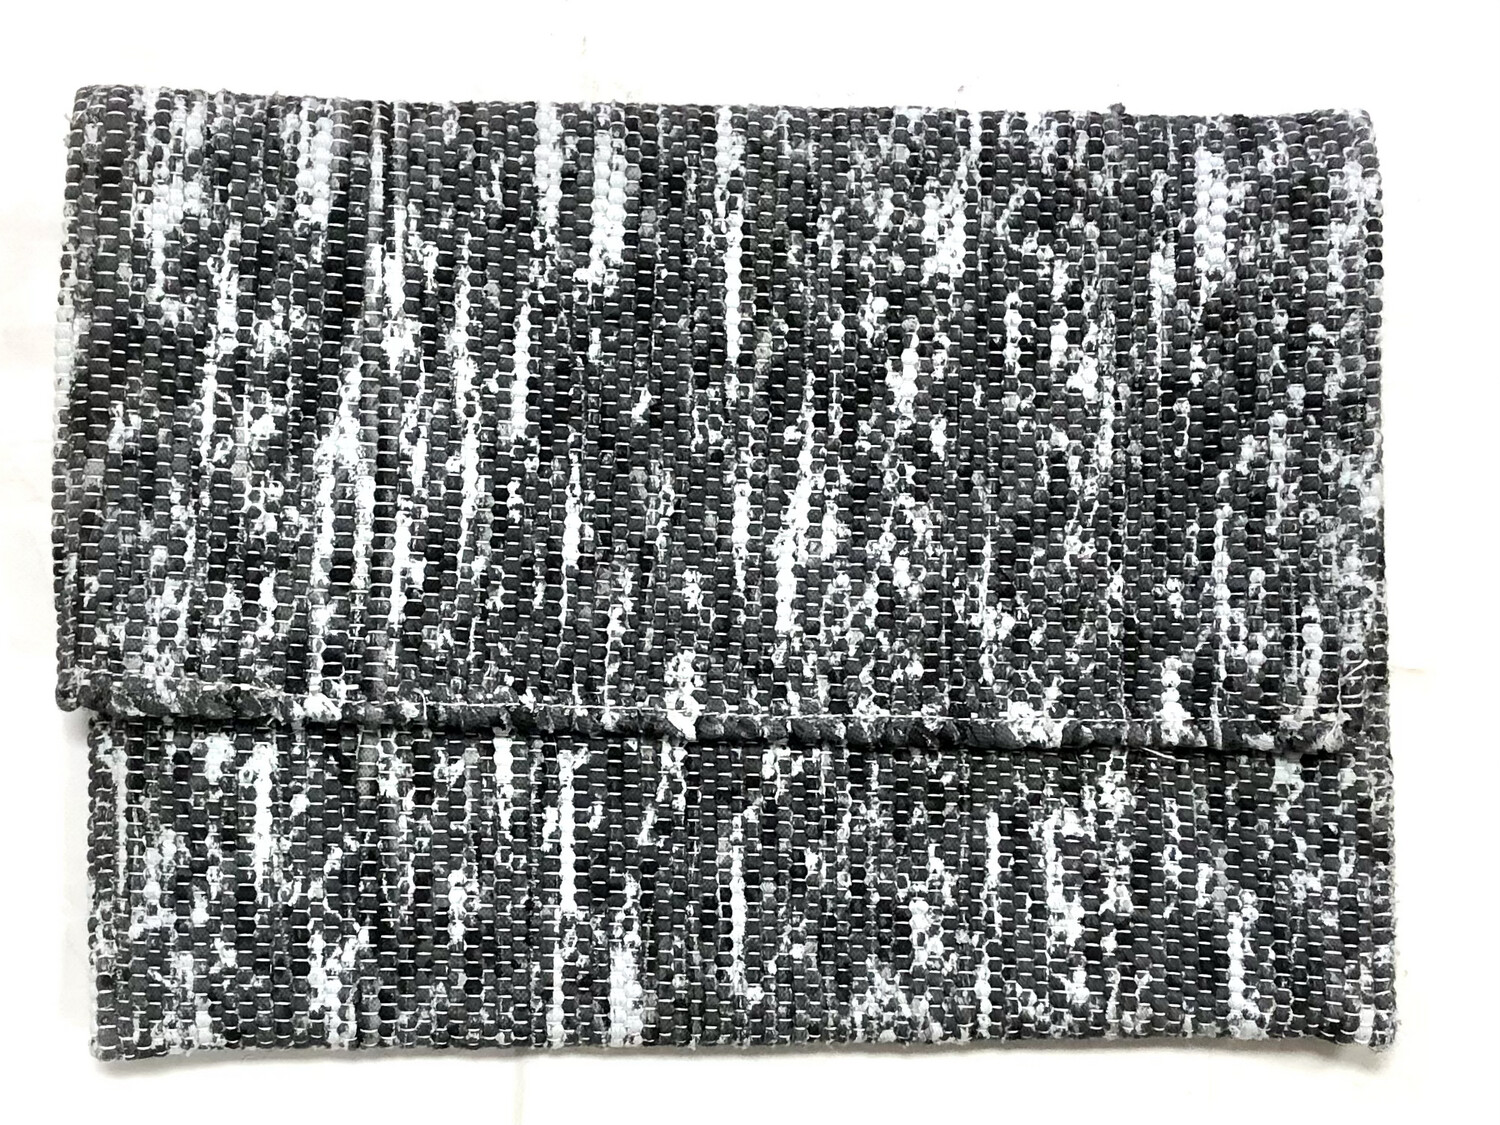 Woven Laptop Sleeve - Patterned Fabric / 27-30*37-40 cm / حافظة لابتوب من قماش منقوش منسوج